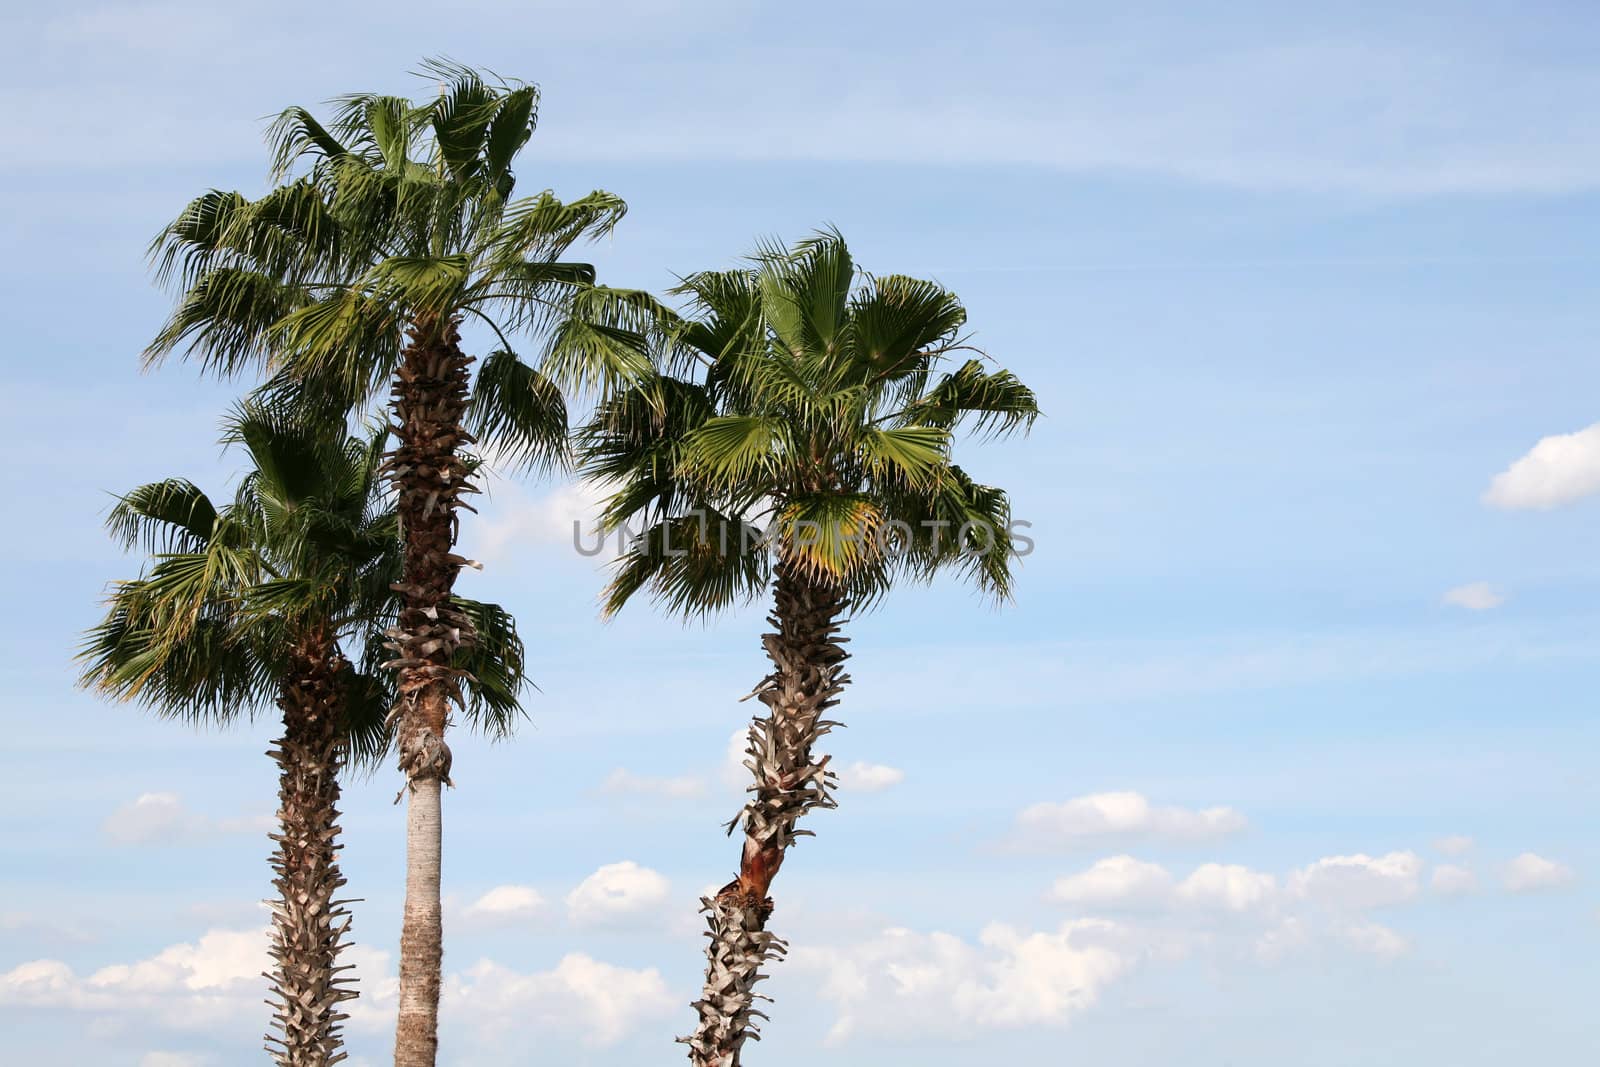 Three palm trees against blue sky by jarenwicklund